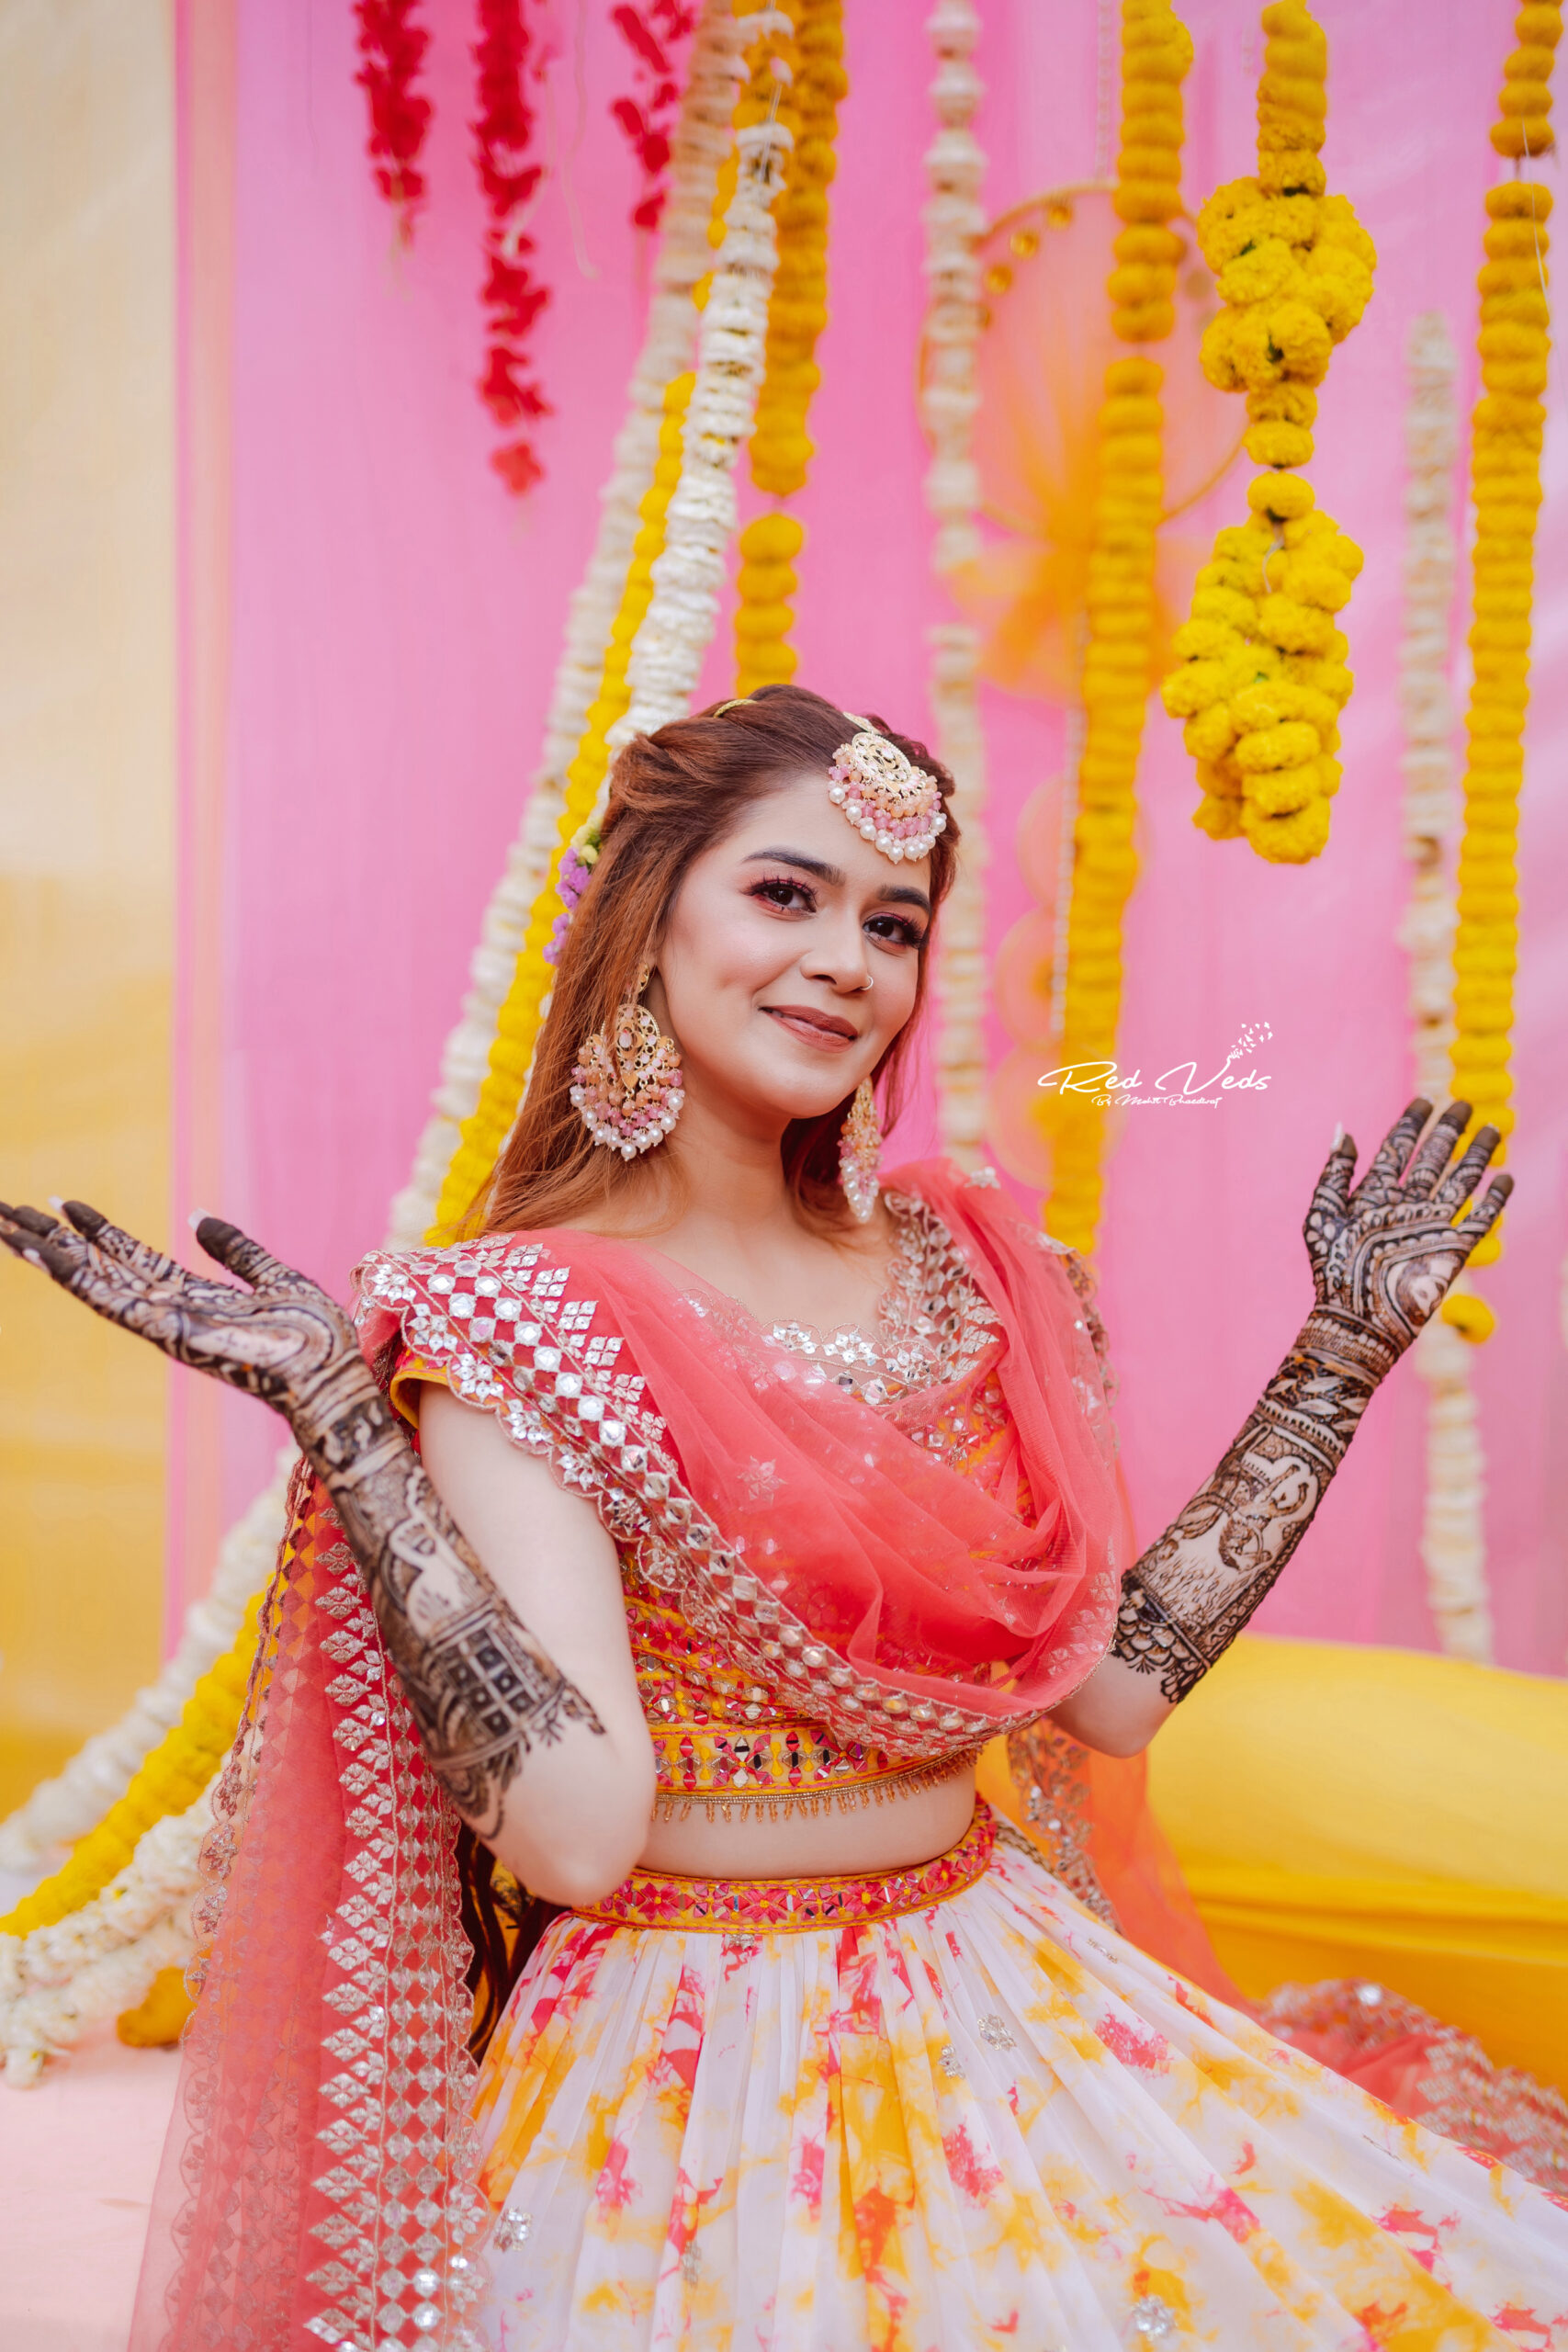 arjun mehandi arts HYDERABAD , Hyderabad - See arjun mehandi arts… | Indian  wedding couple photography, Indian wedding photography poses, Indian  wedding photography